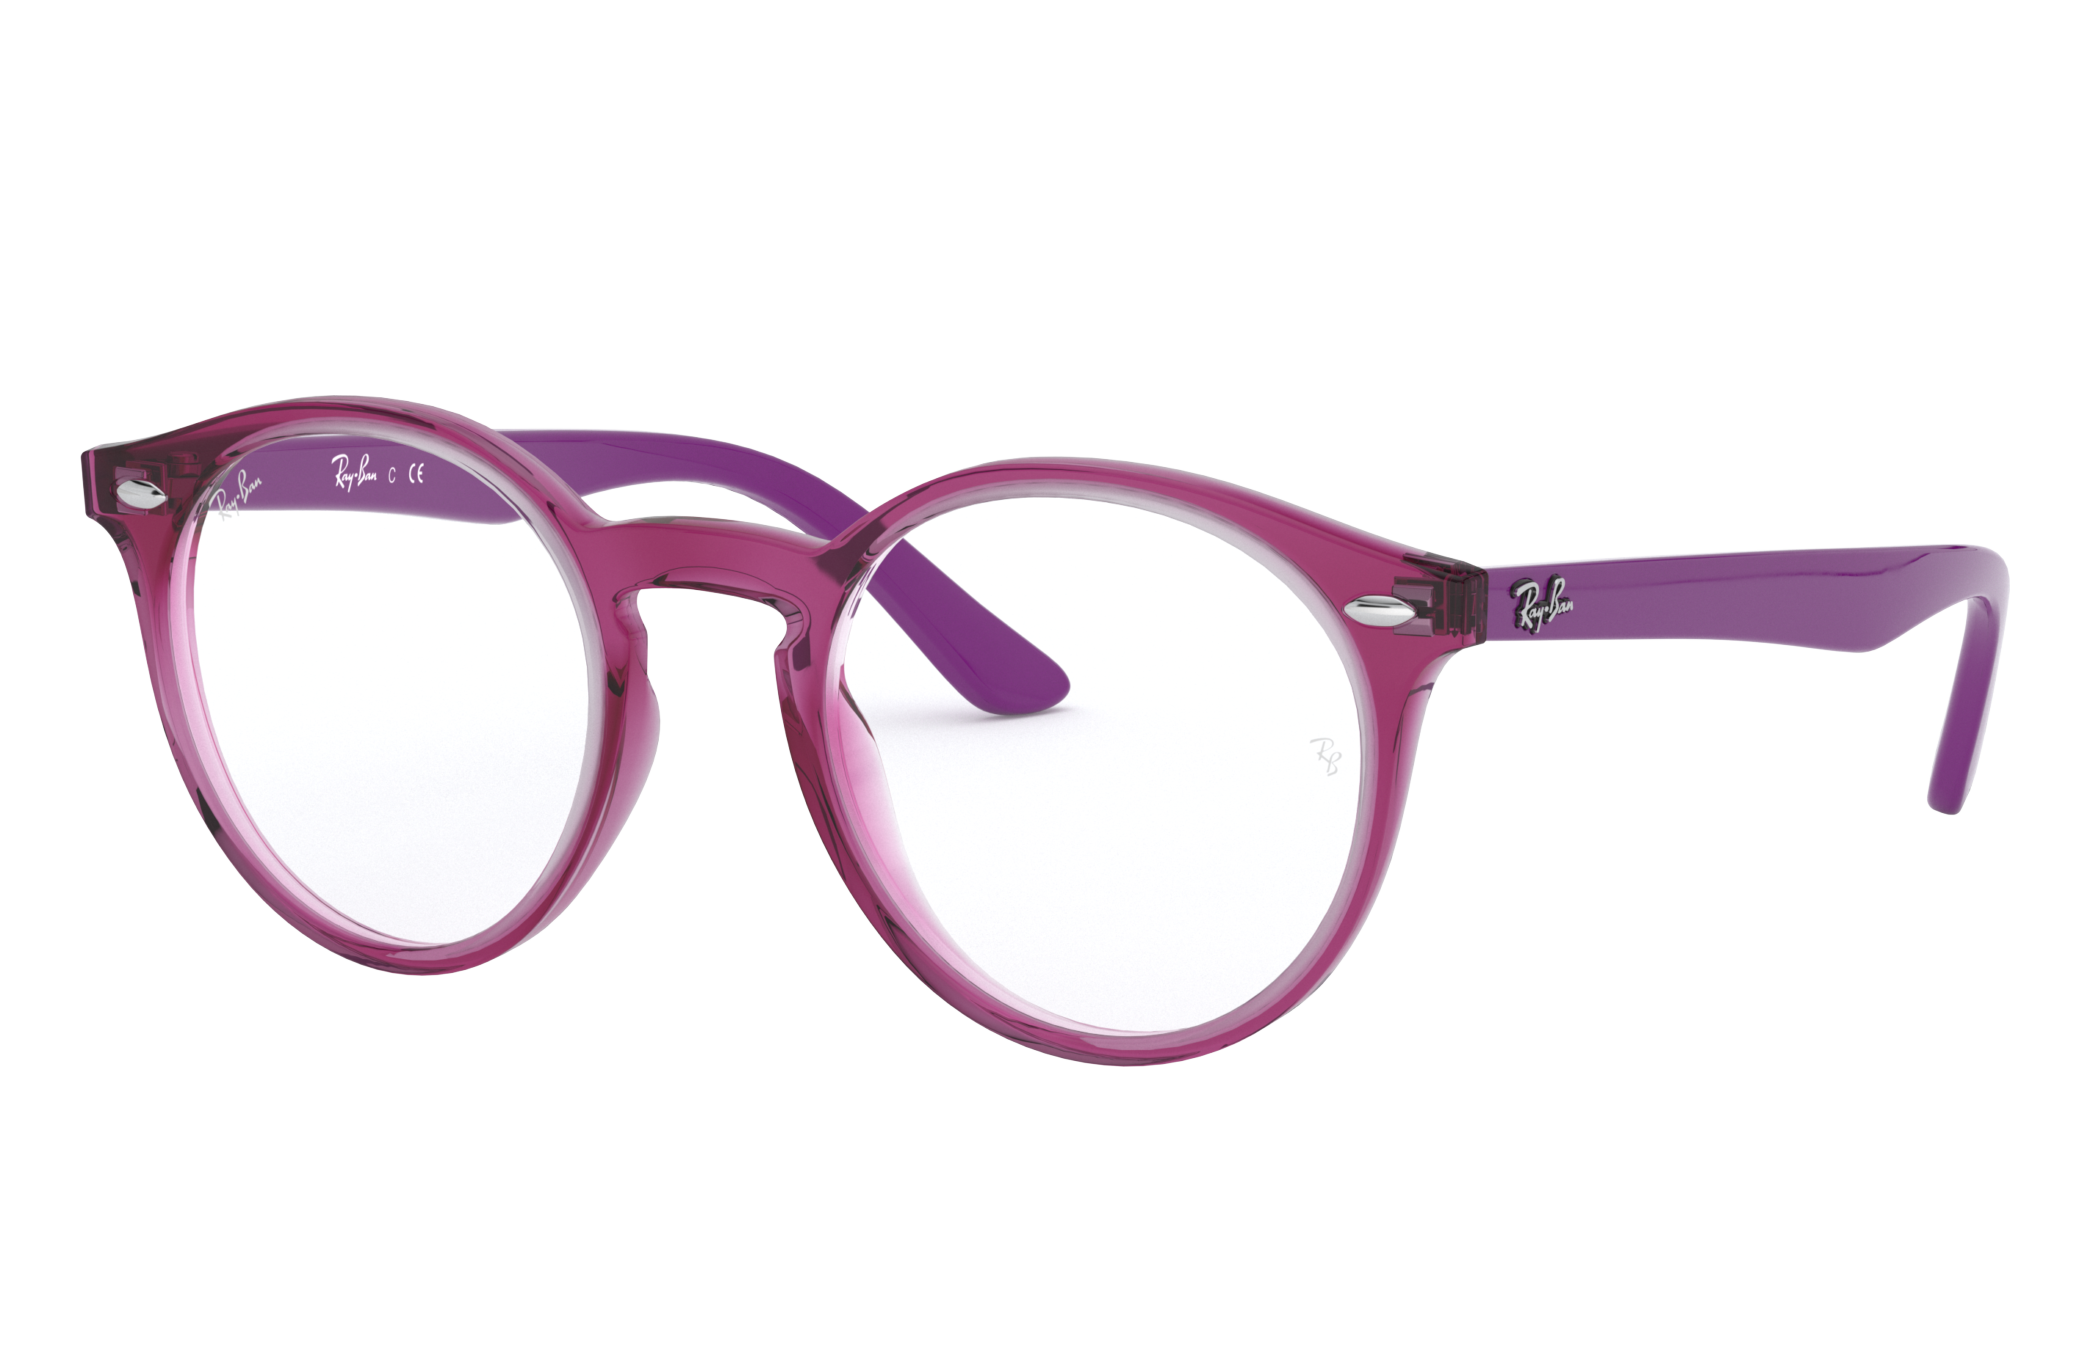 Rb1594 Optics Kids Eyeglasses with Transparent Fuxia Frame - RY1594 ...